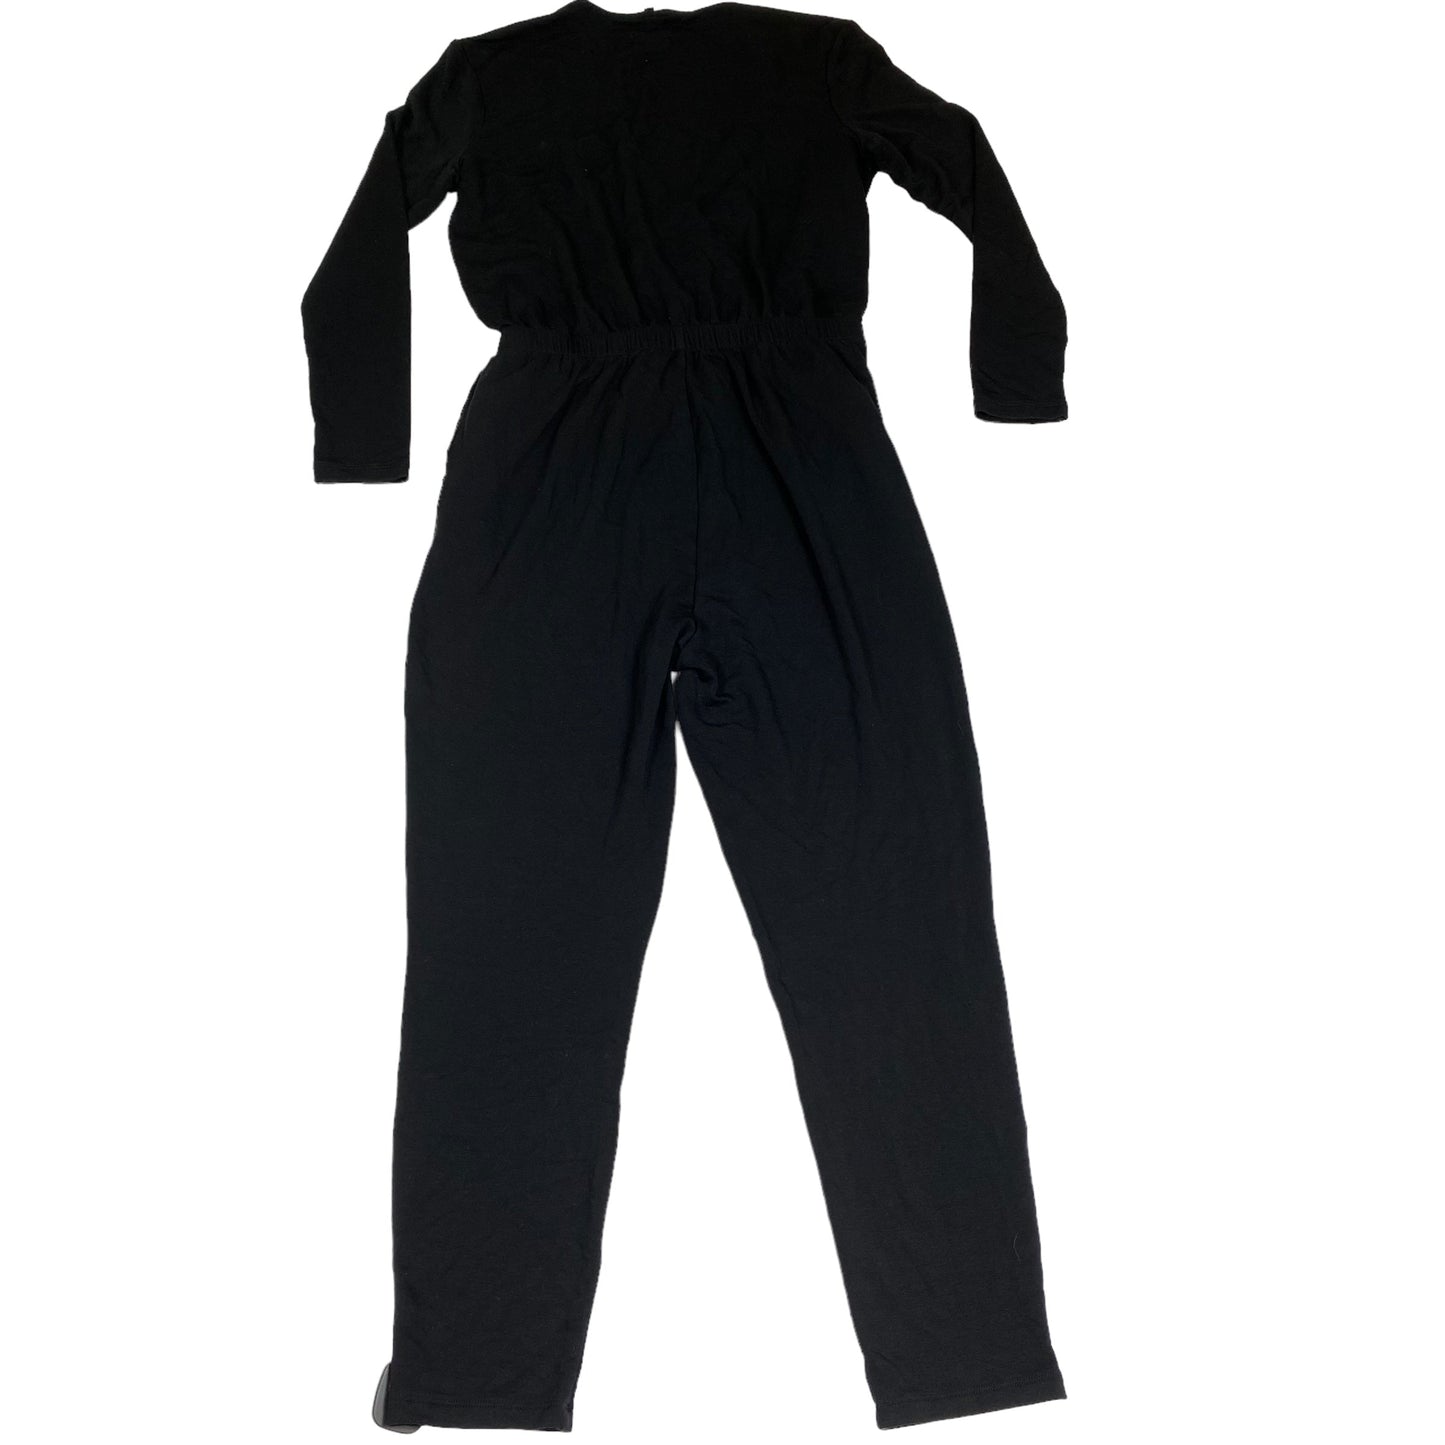 Black Jumpsuit Lou And Grey, Size M